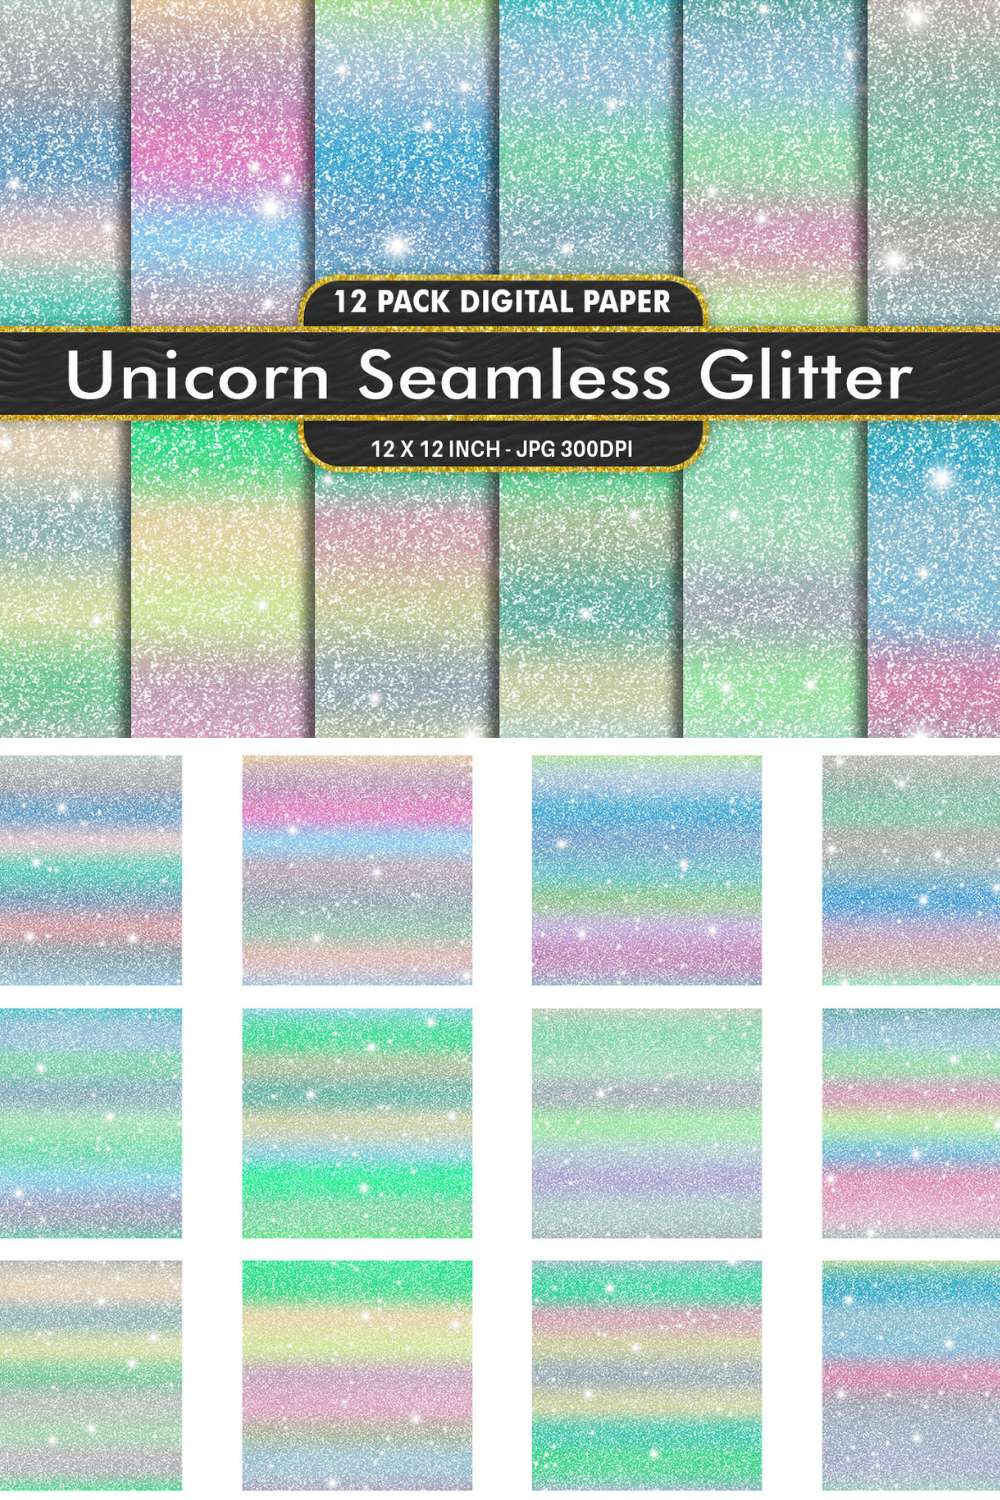 Digital Paper Glitter Unicorn Texture pinterest preview image.